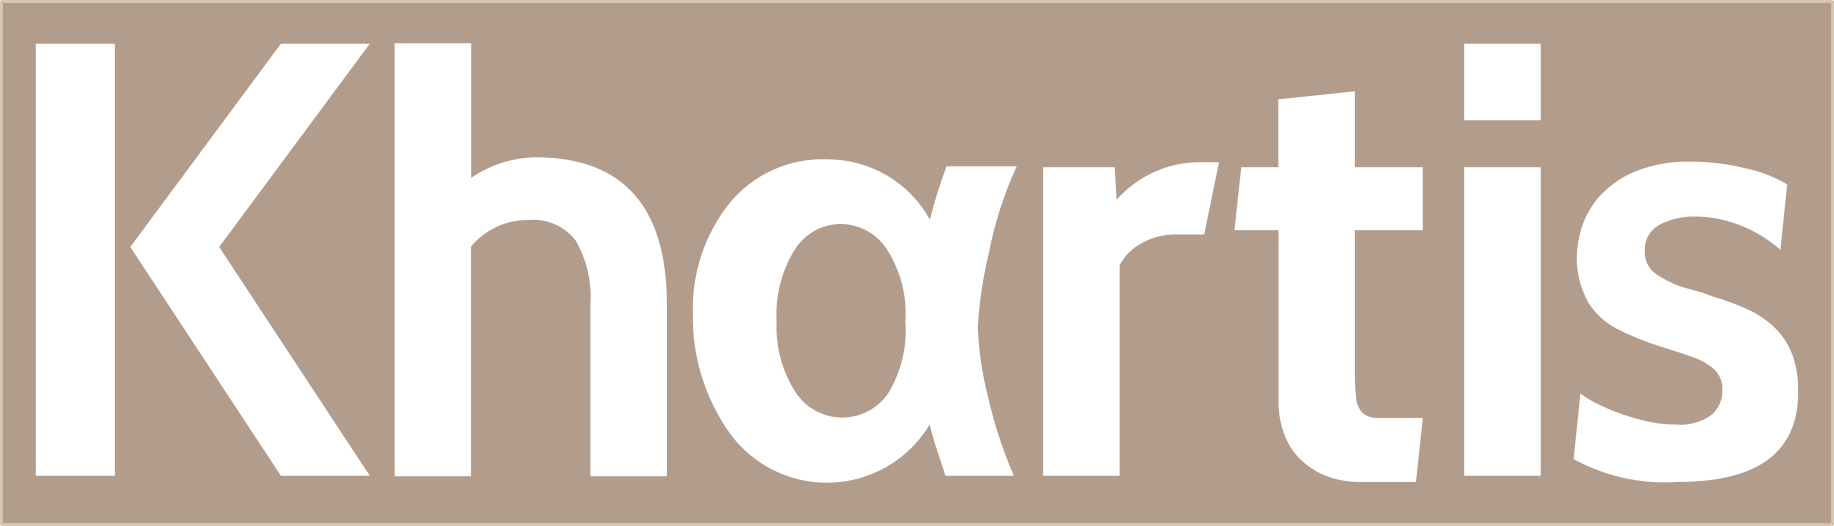 logo Khartis